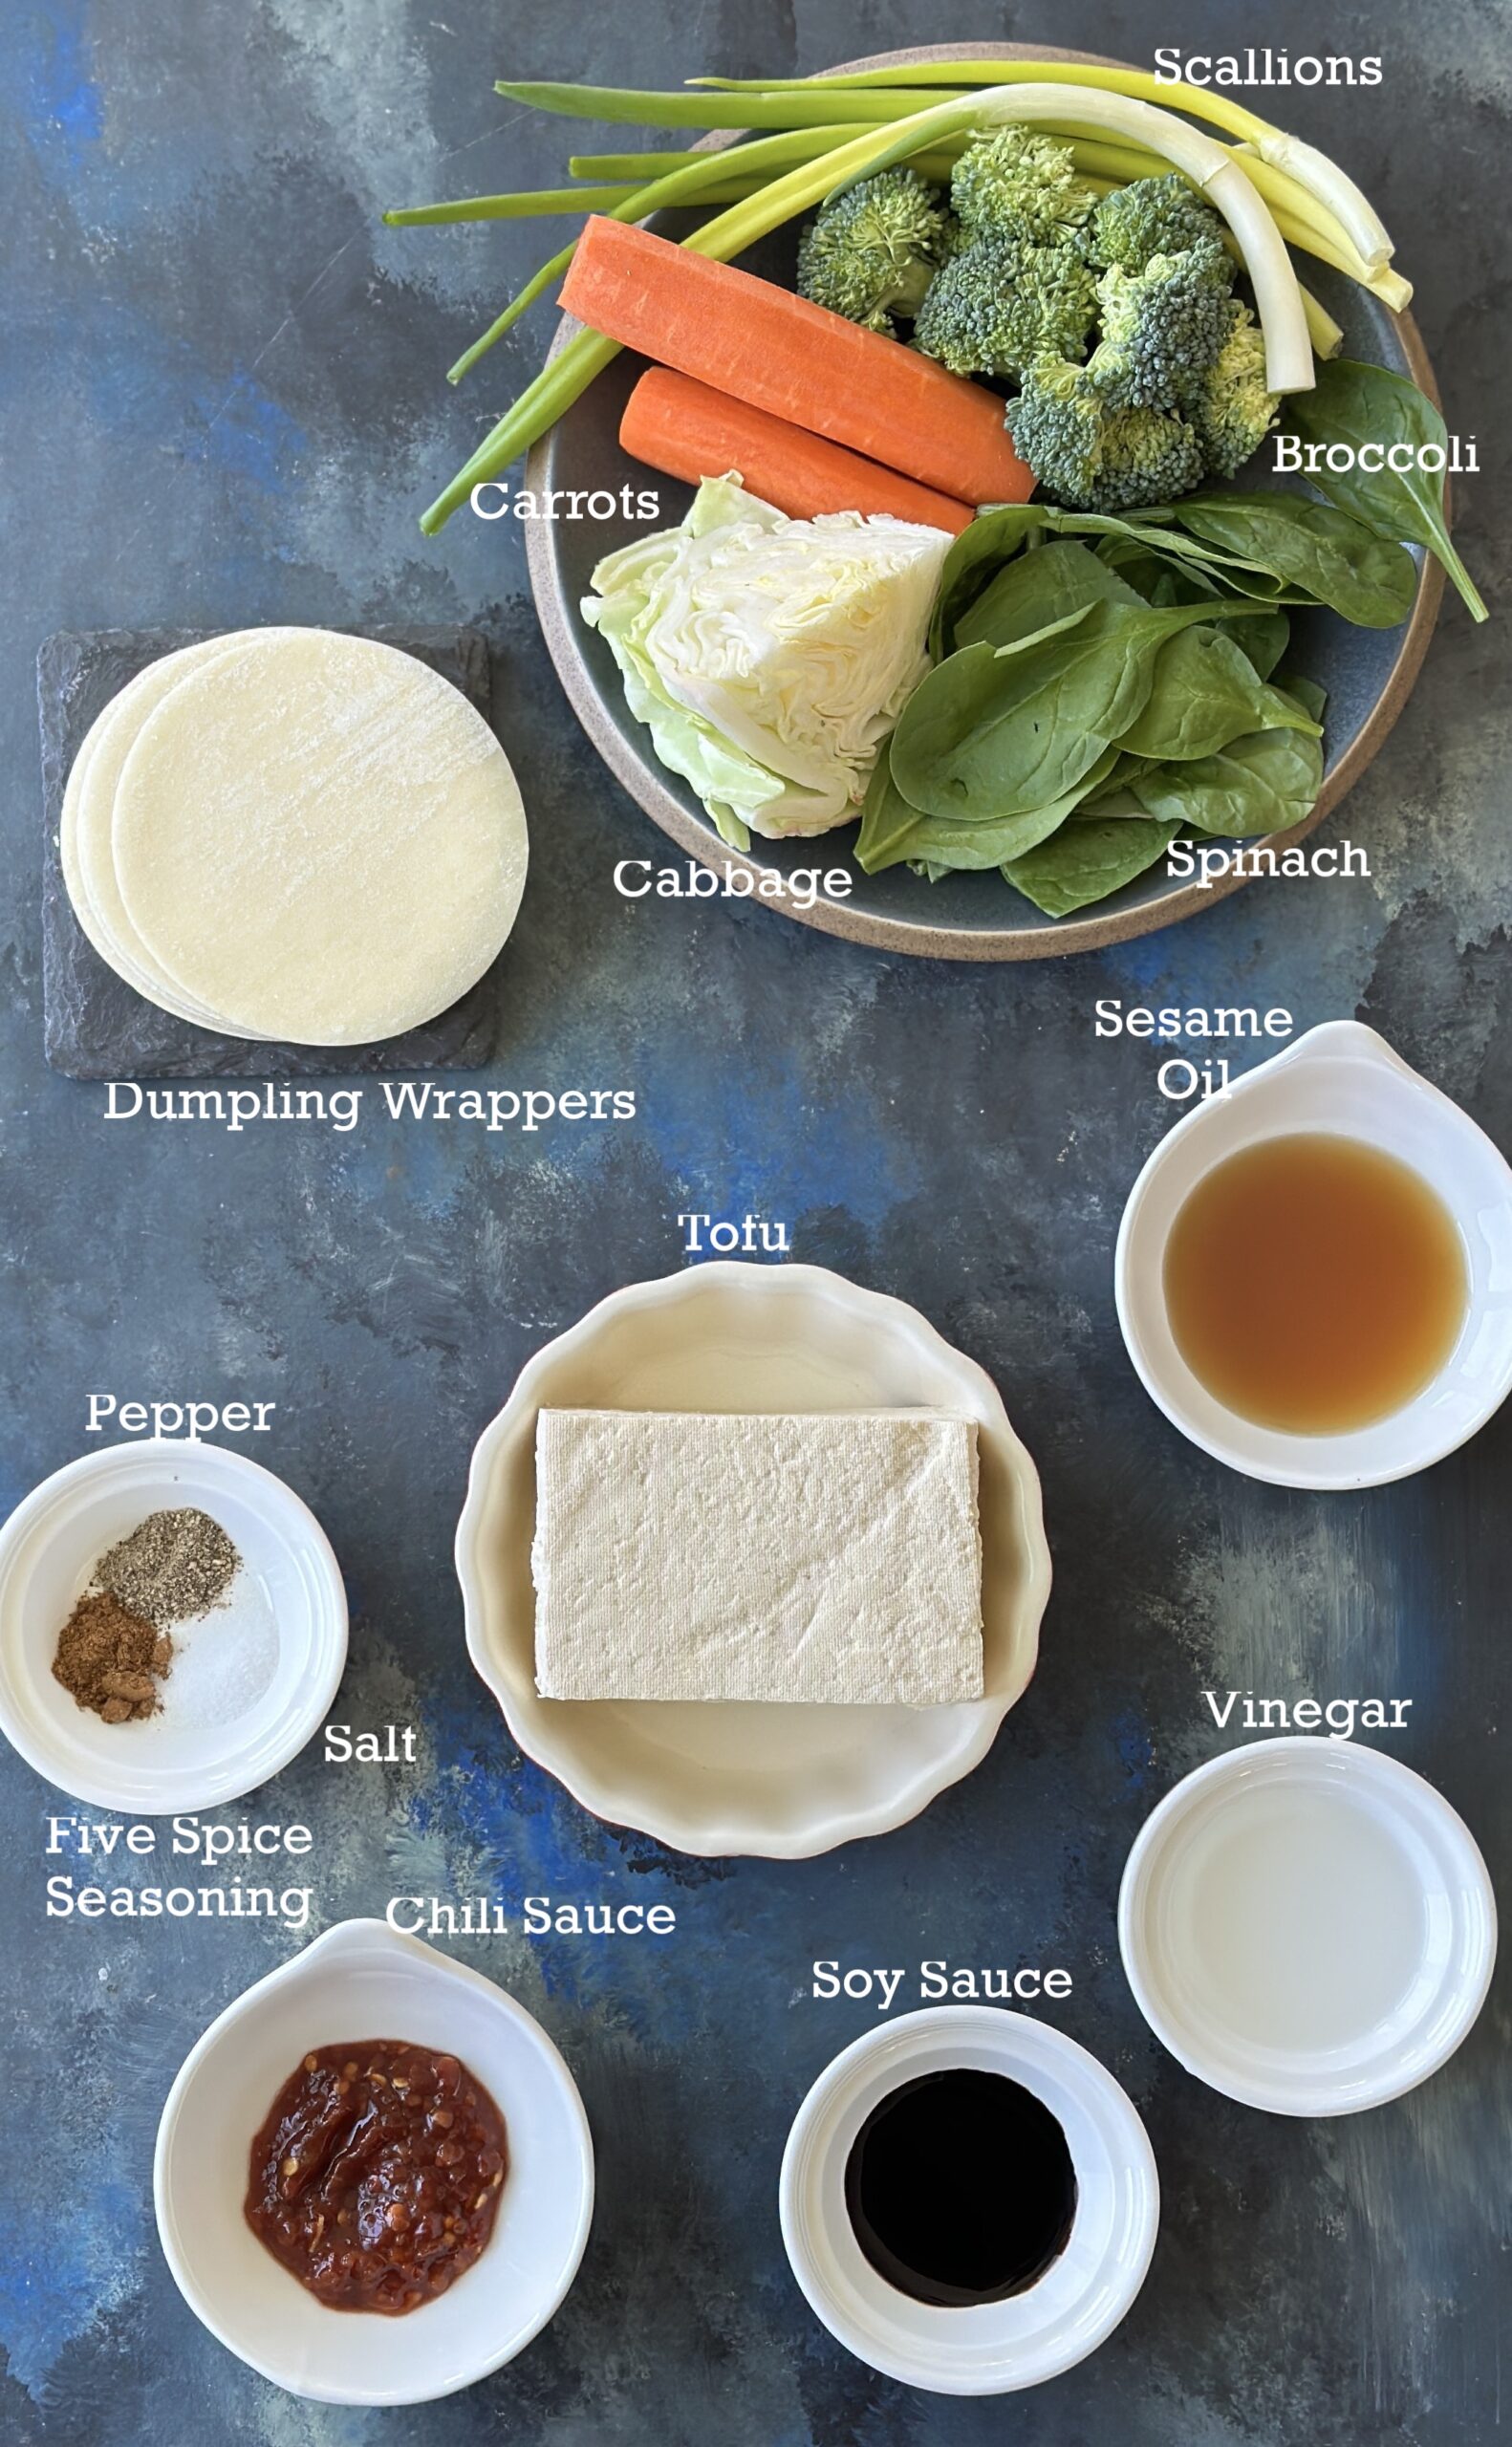 Ingredients for Pan Fried Dumplings; wrappers, vegetables, tofu and seasonings arranged on a black surface. 